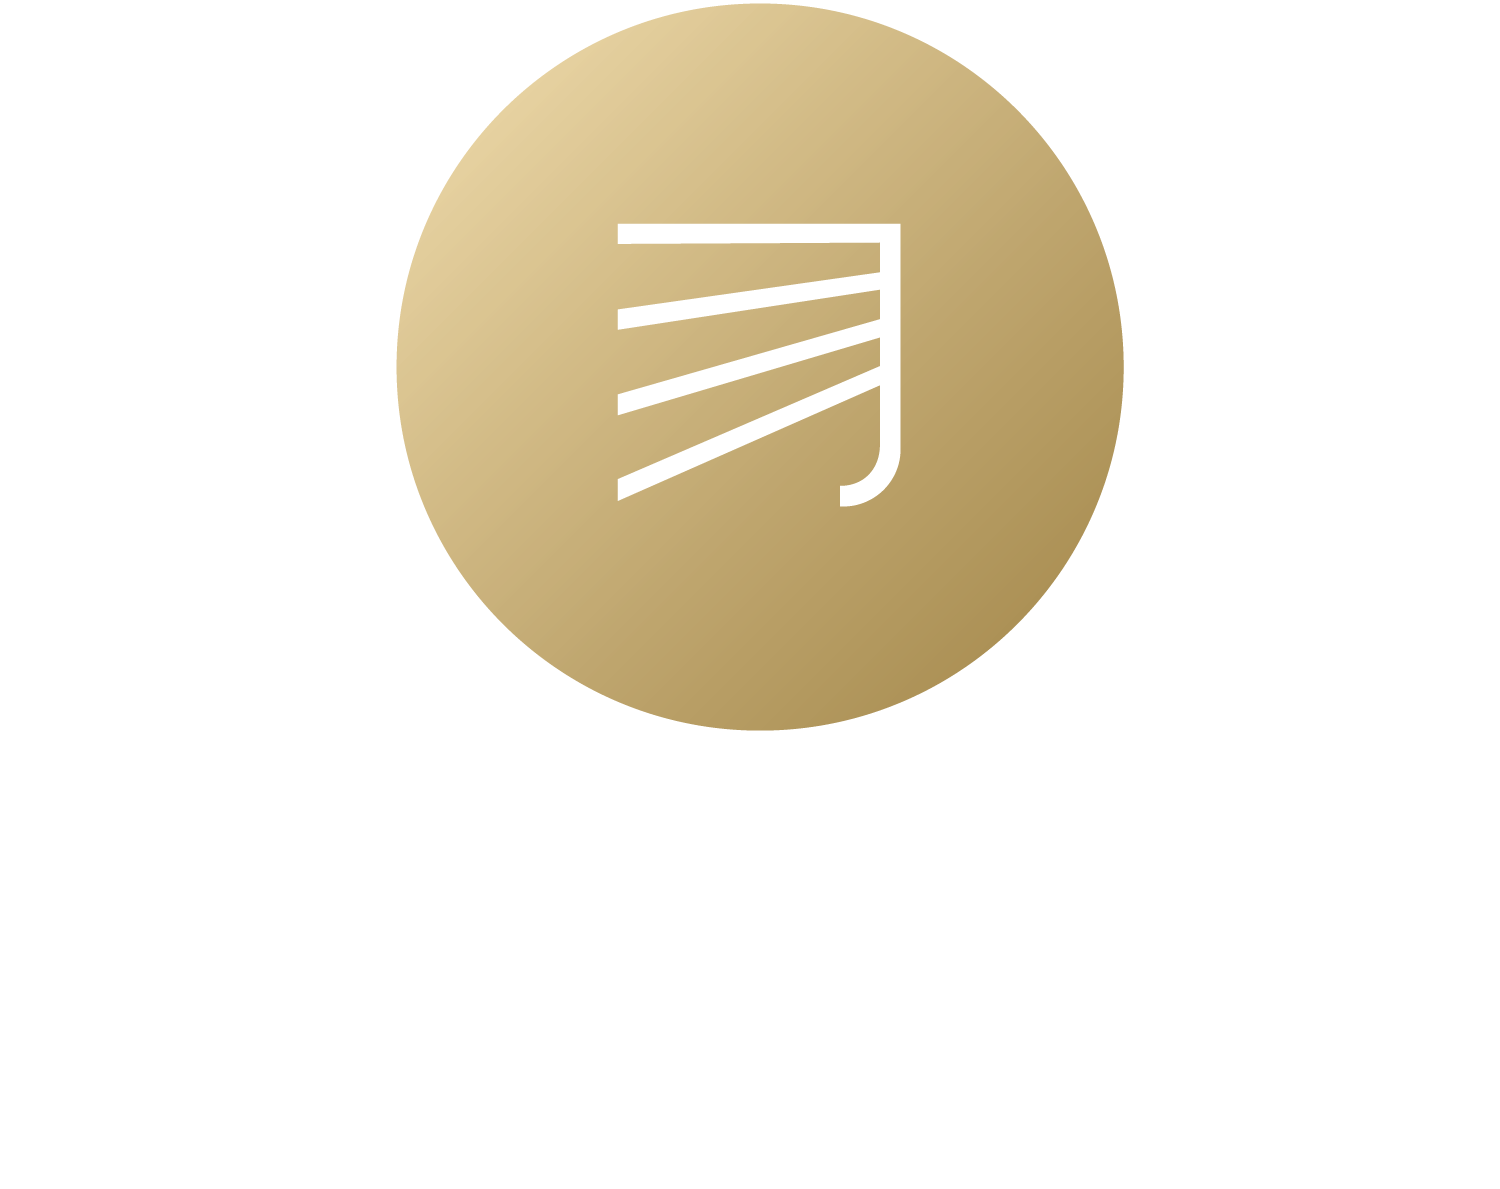 Chieftain Securities